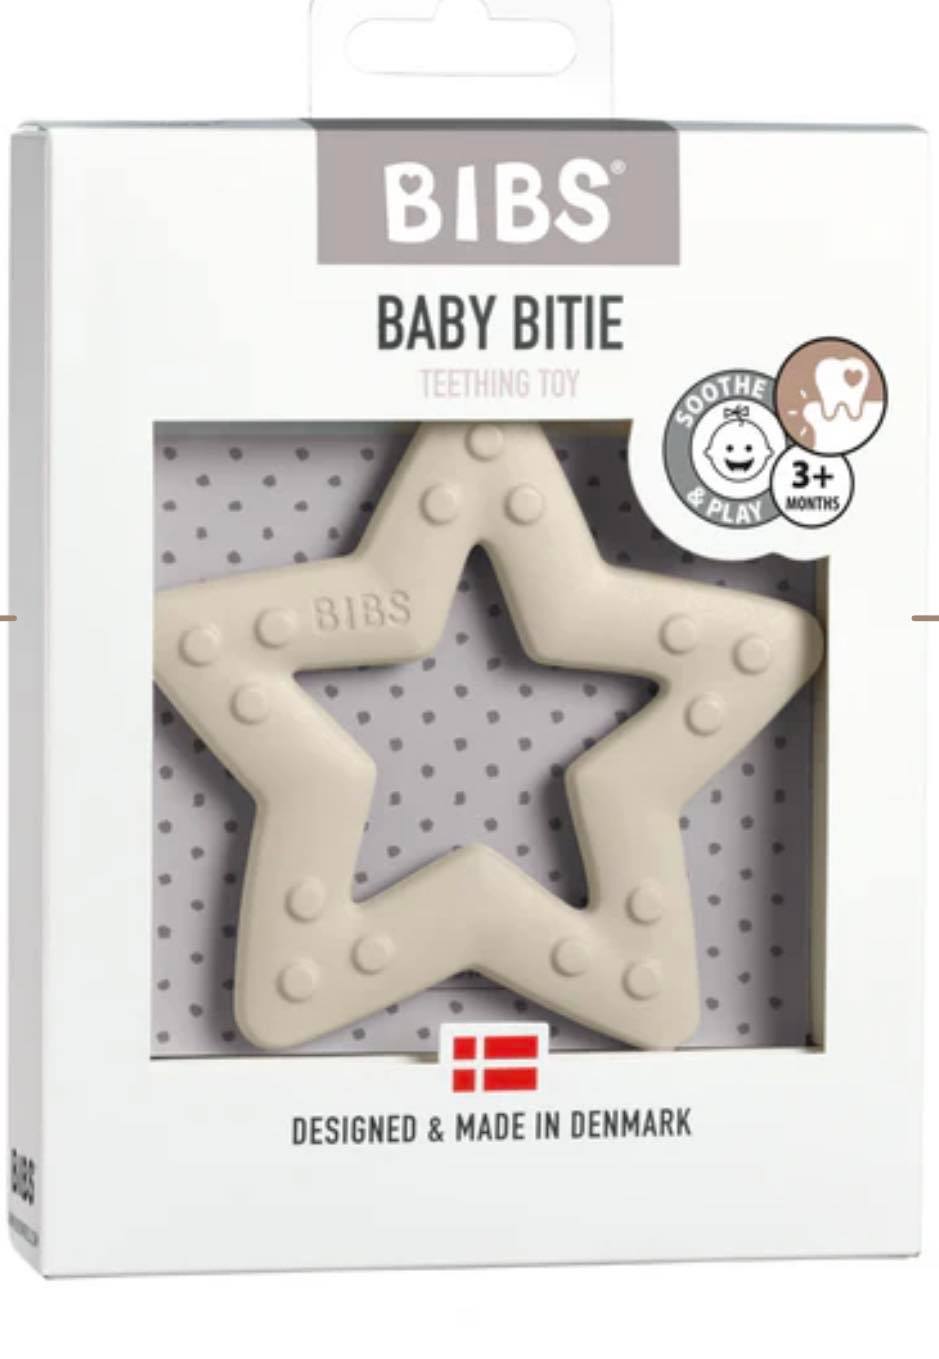 Baby Bitie teething toy 